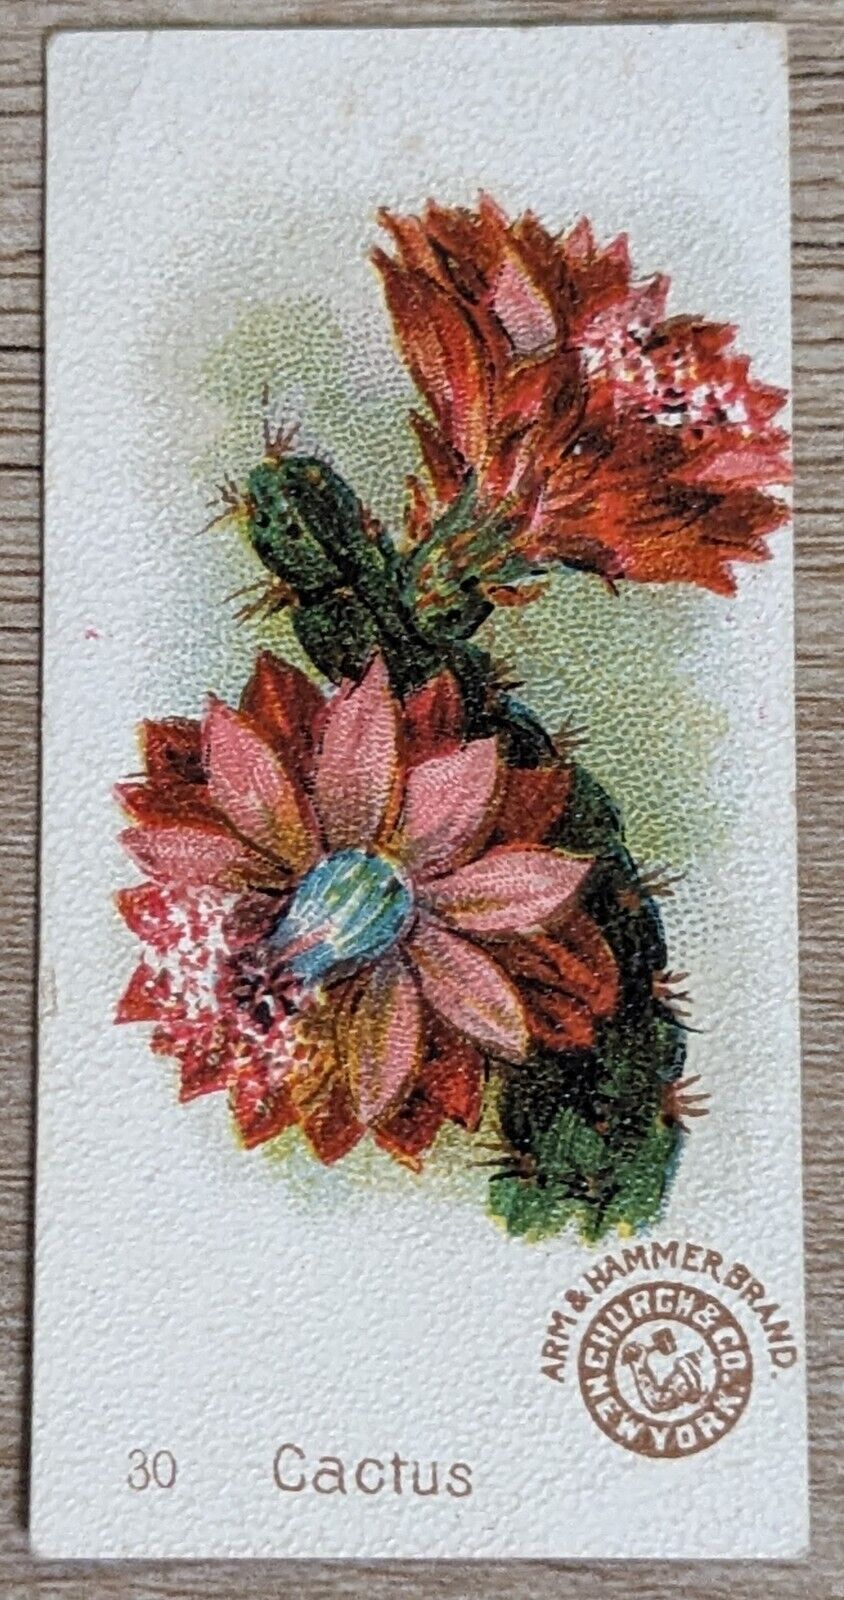 1895 AH801 Church & Co Arm & Hammer Beautiful Flowers Cactus Trade Card #30